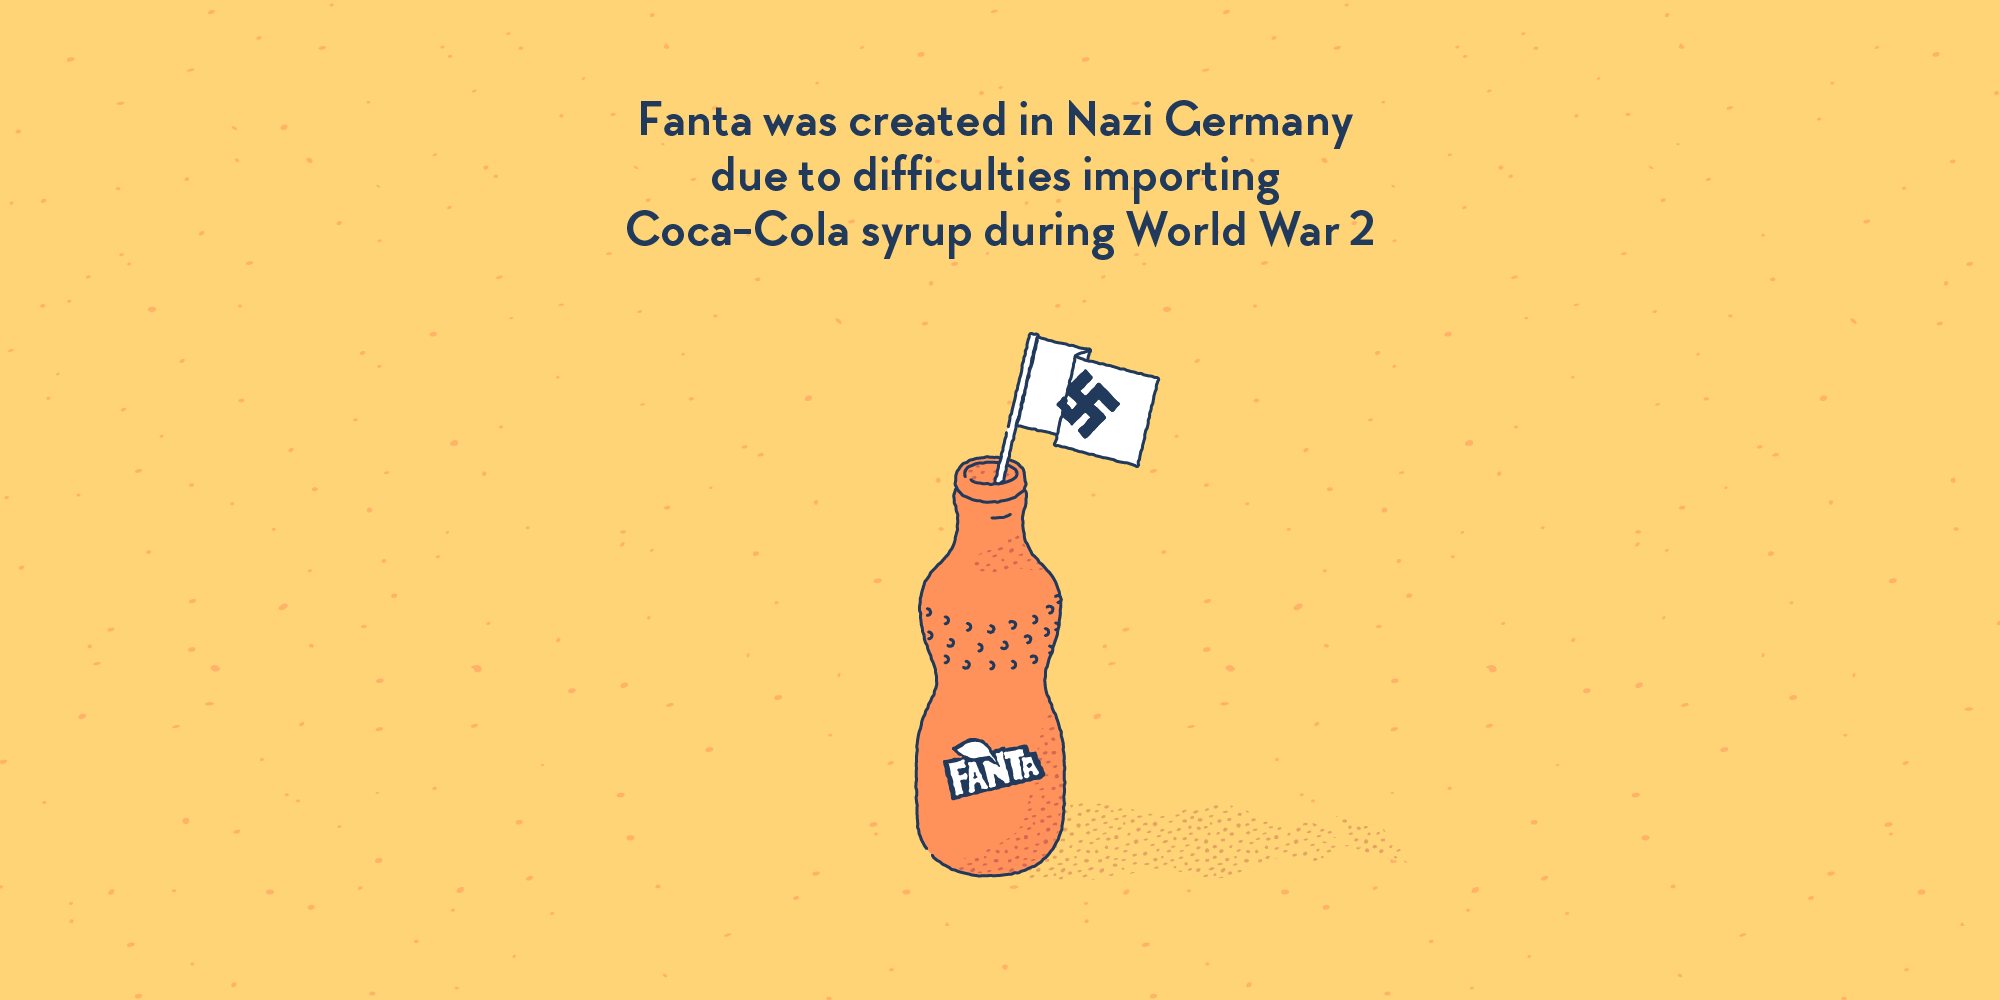 A Fanta bottle with a Nazi flag